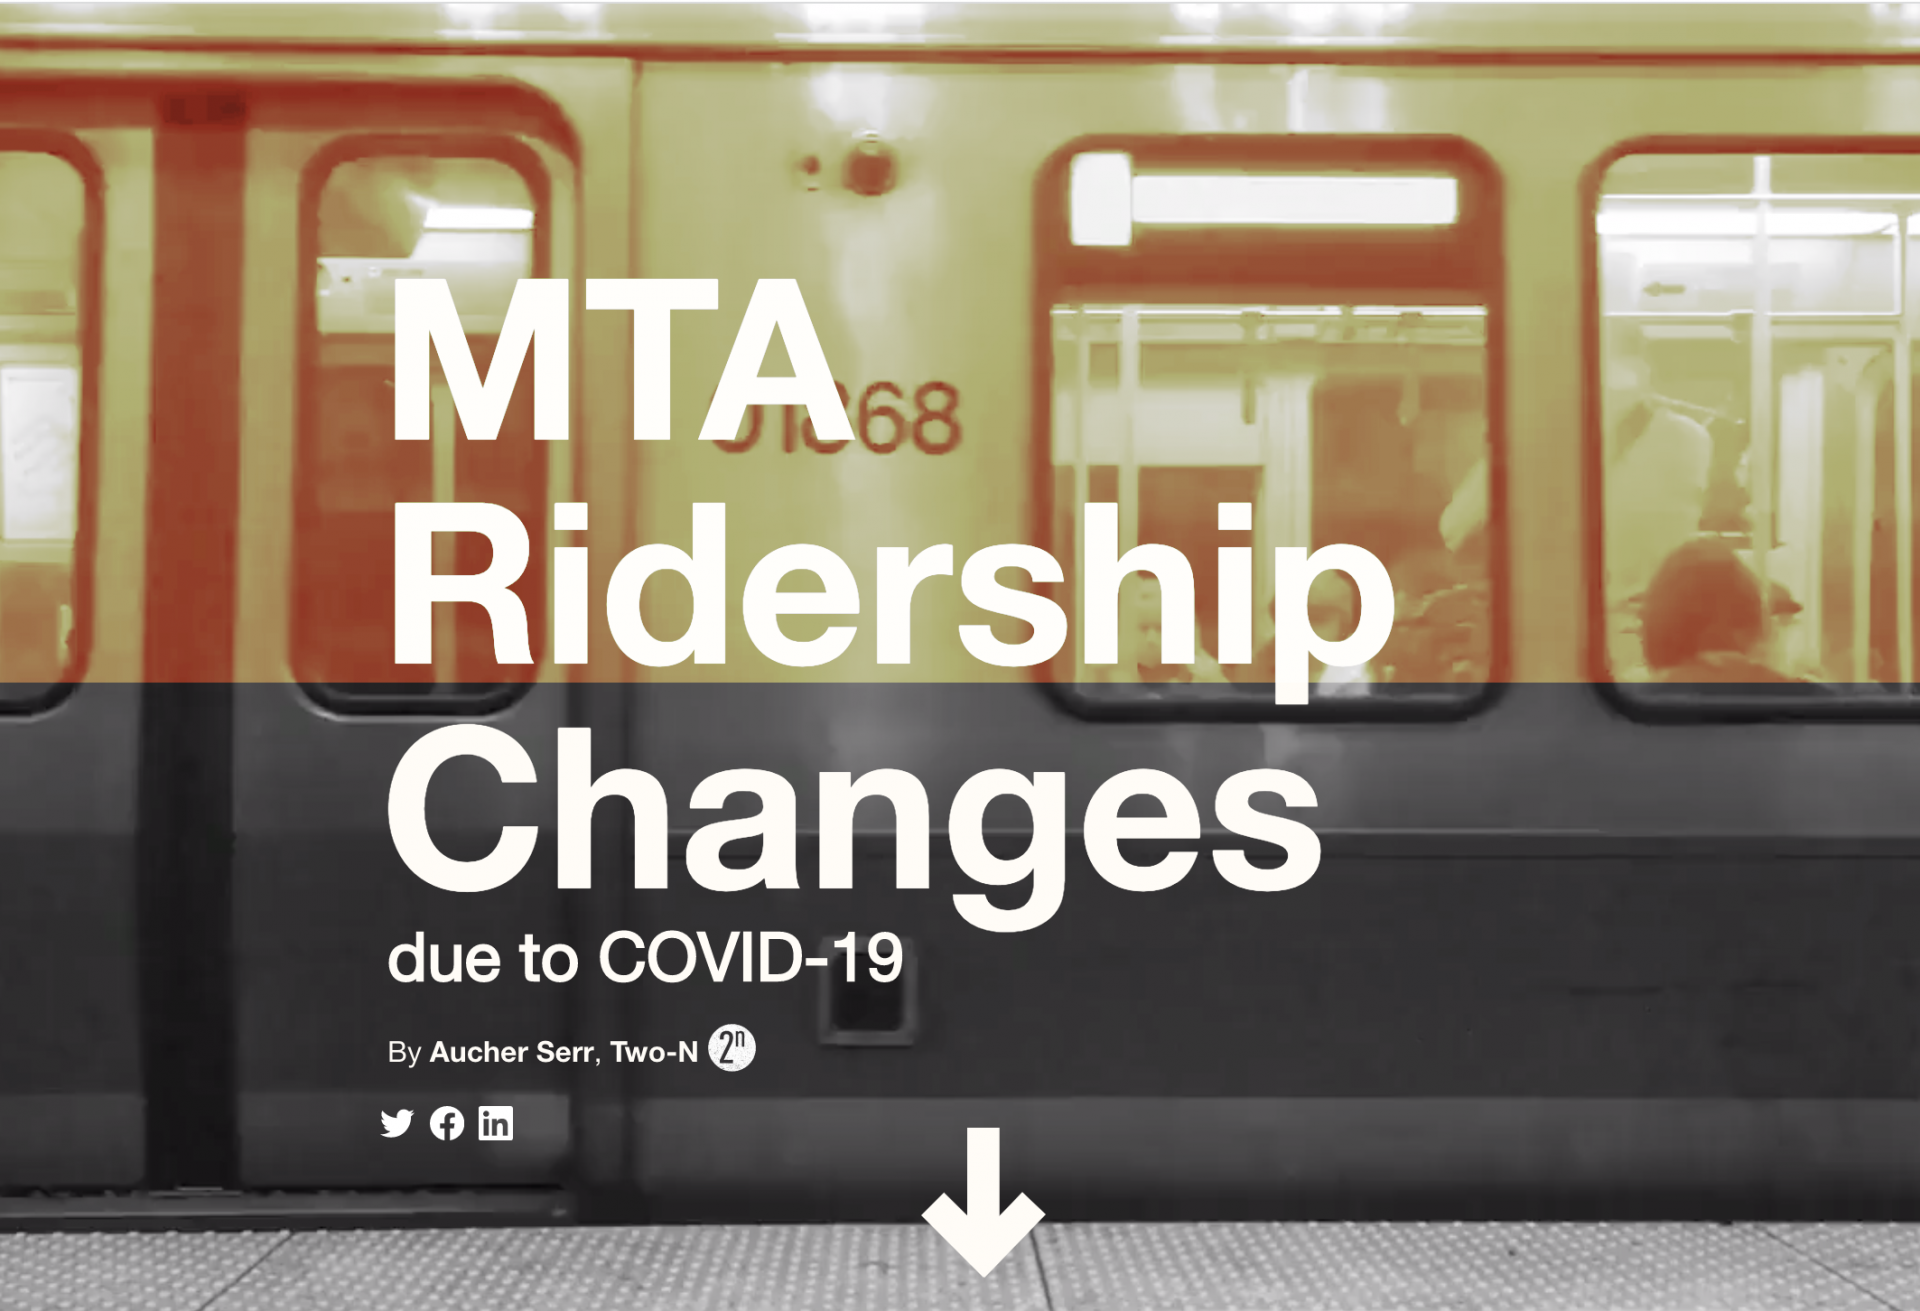 Vega Digital Awards Winner - MTA Ridership Changes due to Covid-19, TWO-N, Inc